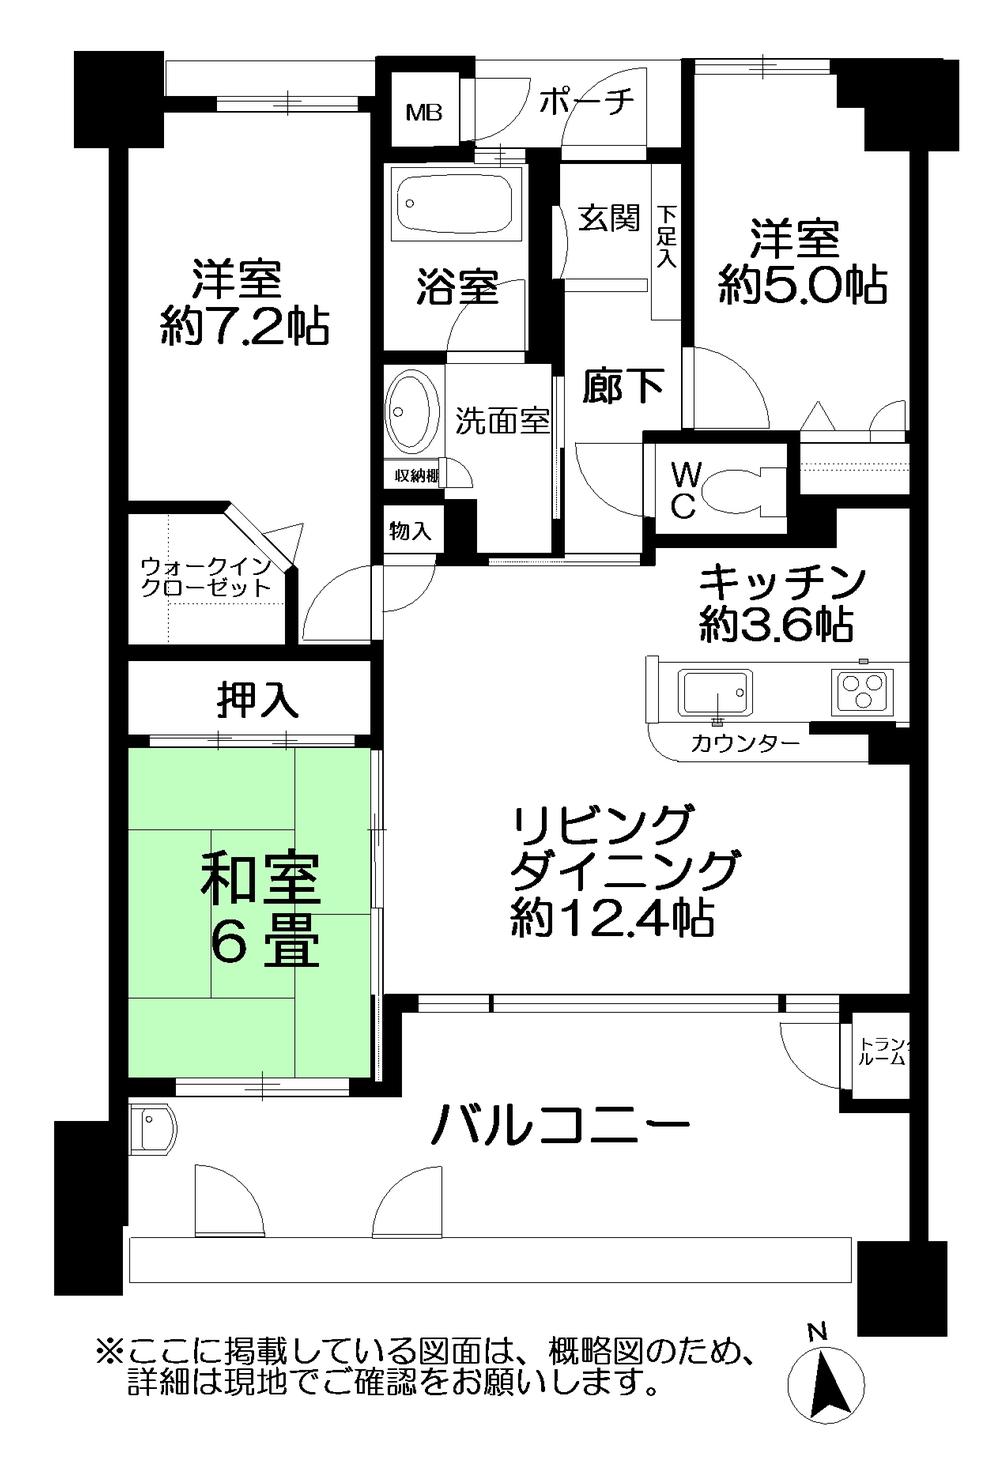 Floor plan. 3LDK, Price 16 million yen, Occupied area 76.23 sq m , Balcony area 19.69 sq m